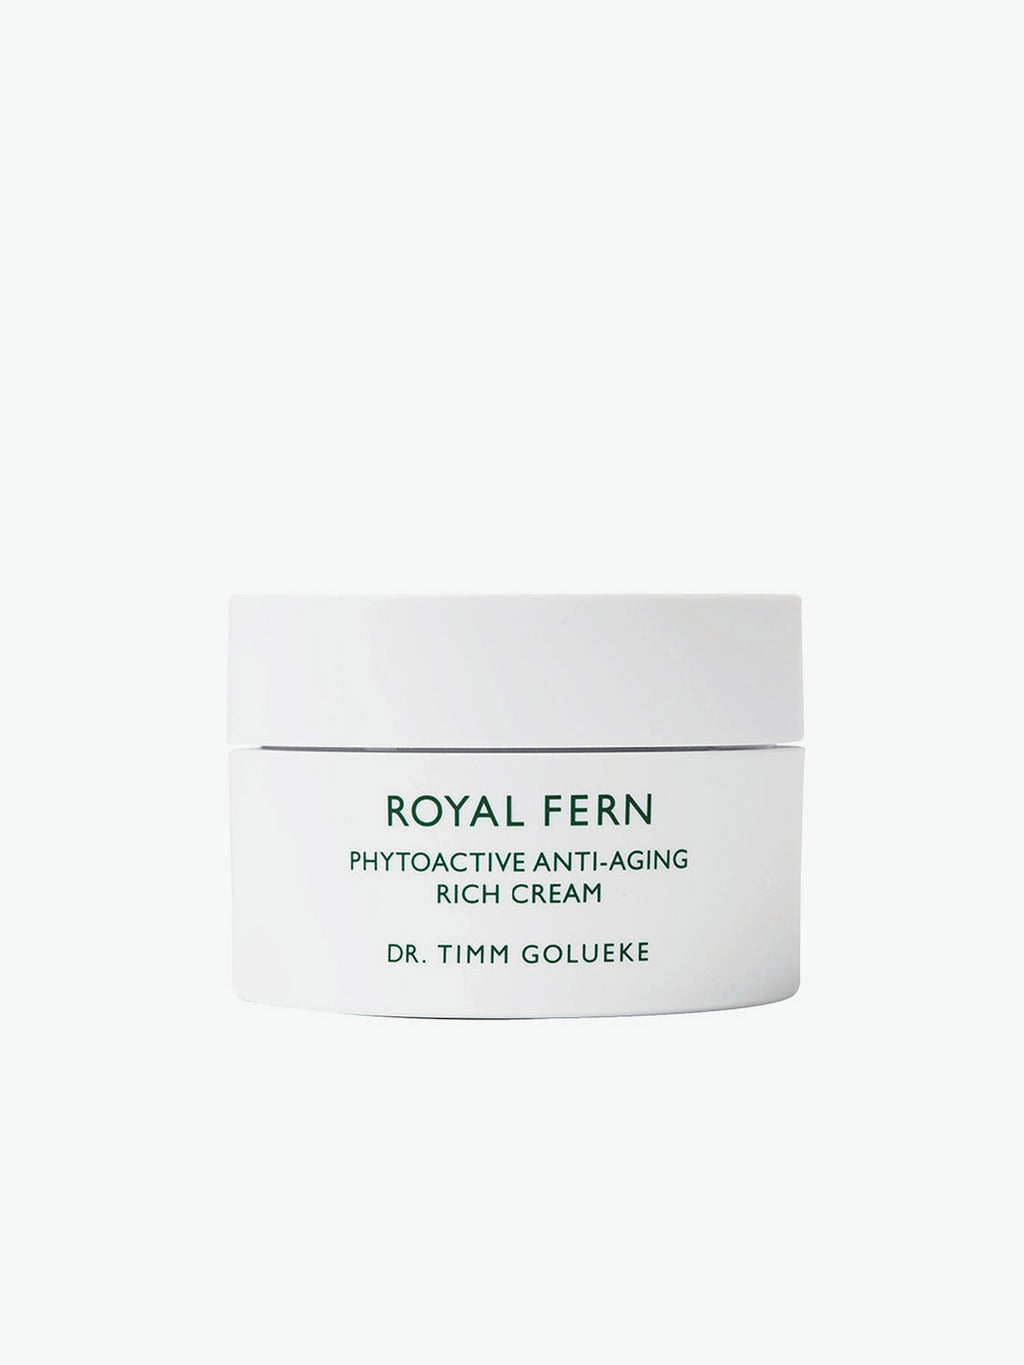 Royal Fern Phytoactive Anti-Aging Rich Cream | A